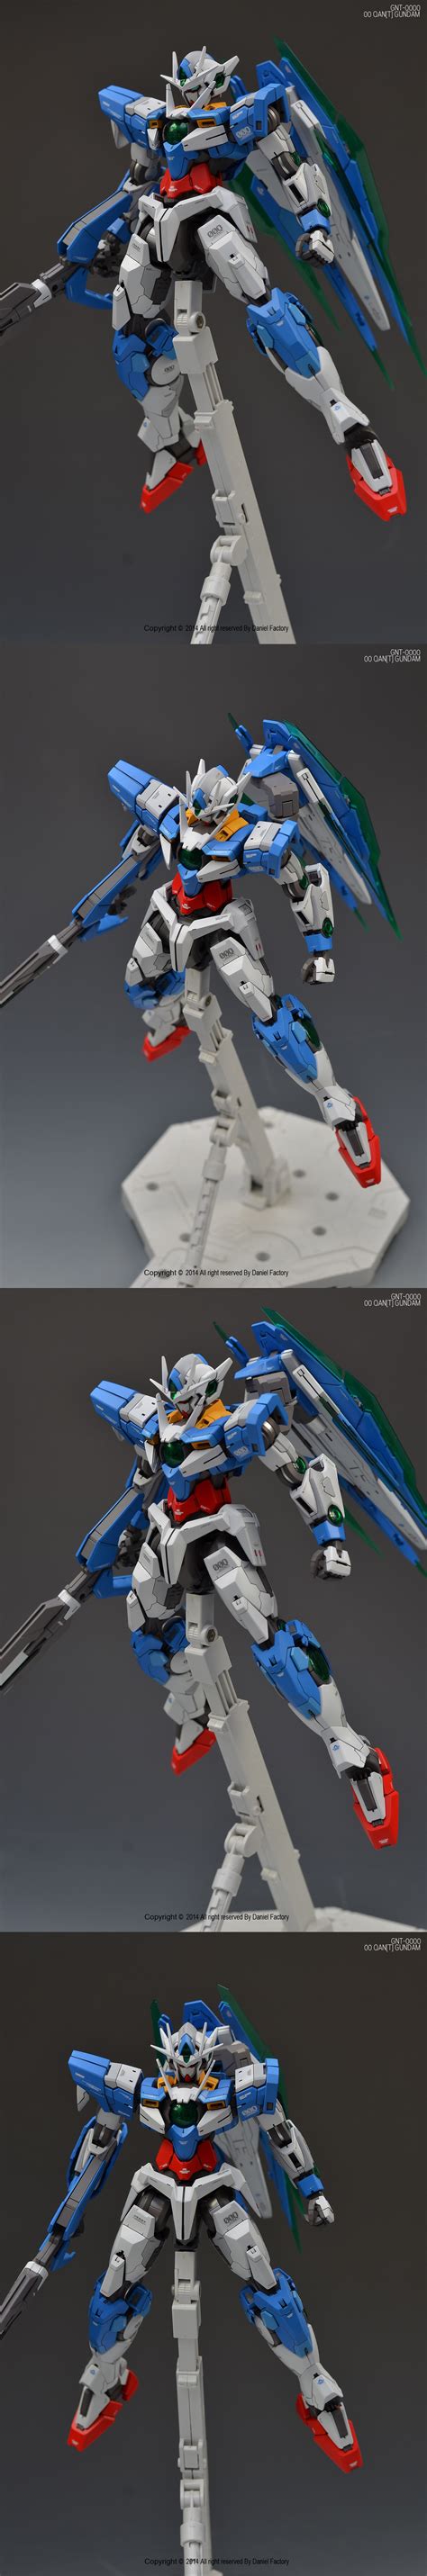 MG 1 100 00 Gundam Qan T Ver 2 0 Custom Remodeling Work By Daniel